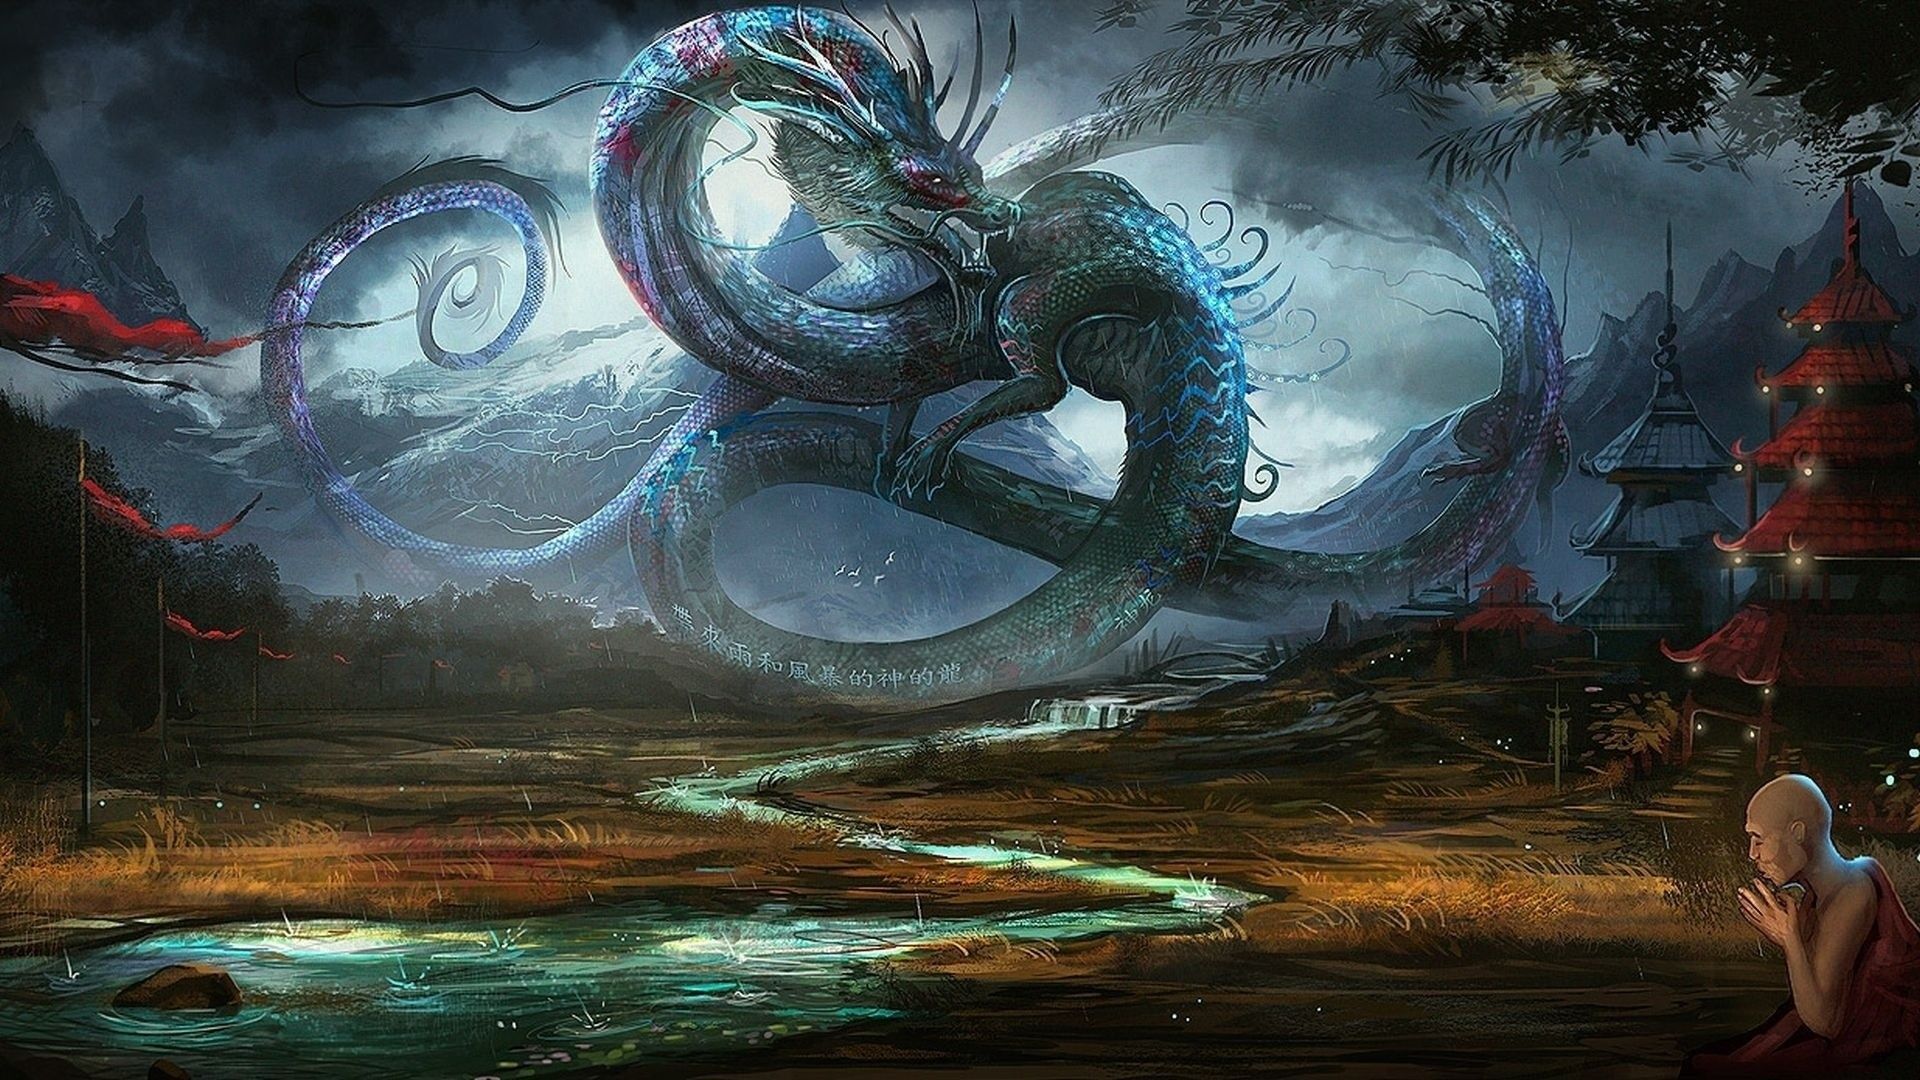 Download Fantasy Dragons Images Wallpaper 1920x1080 | Full HD ...